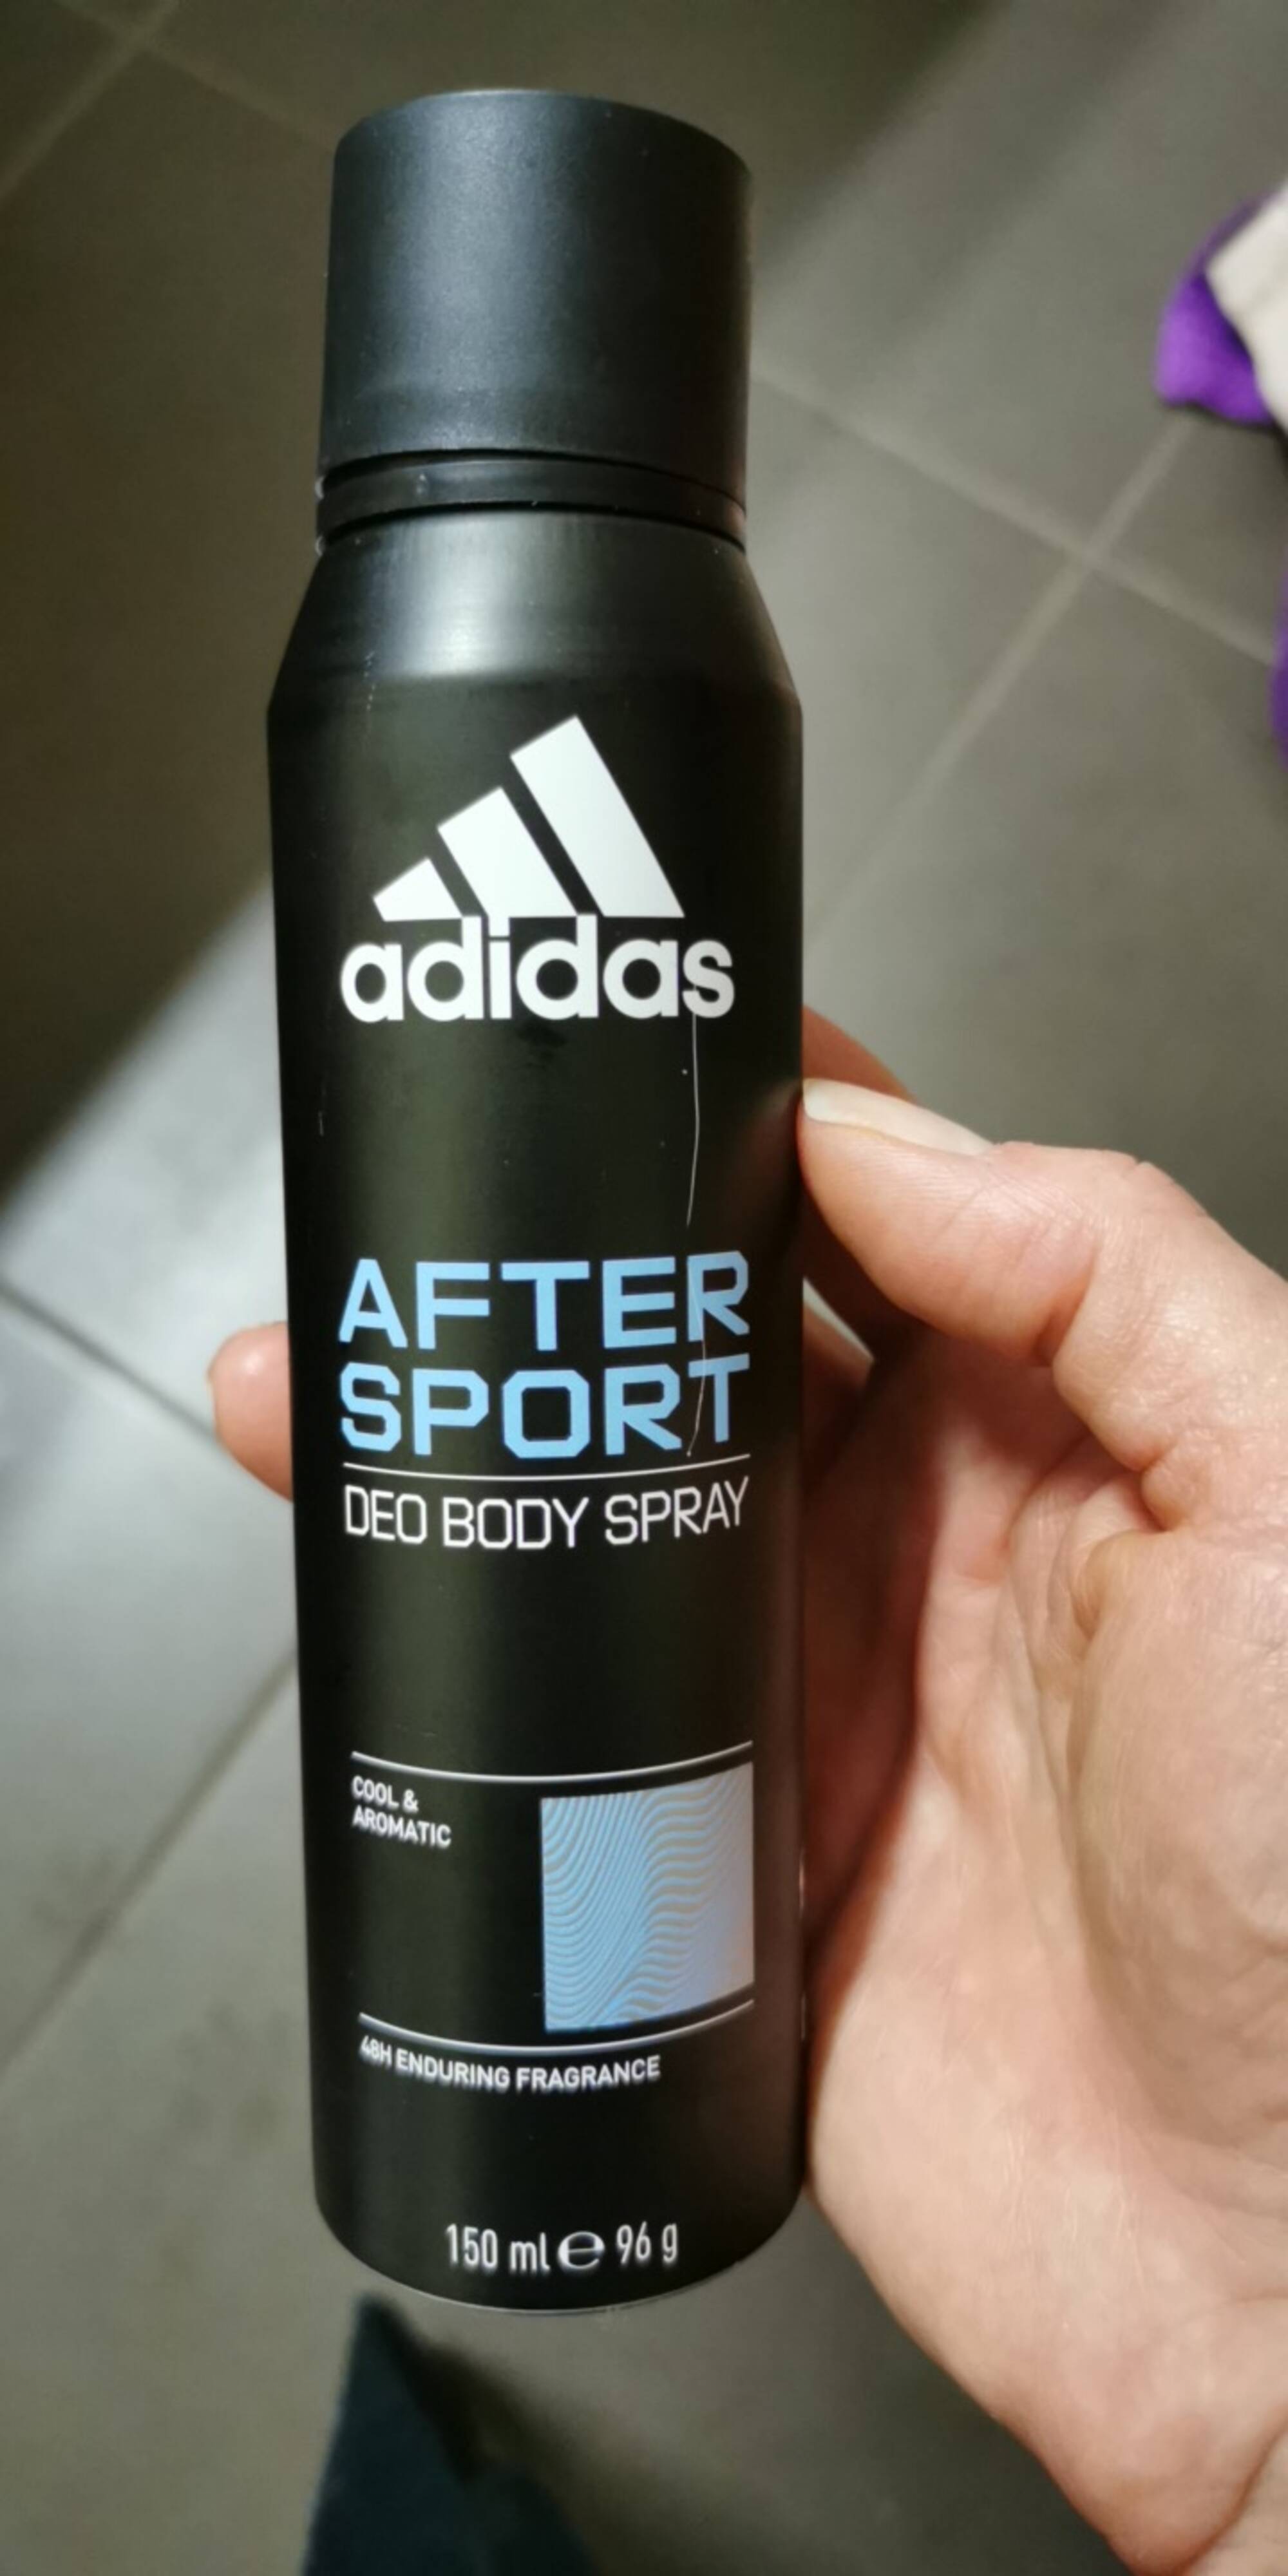 ADIDAS - After sport - Deo body spray